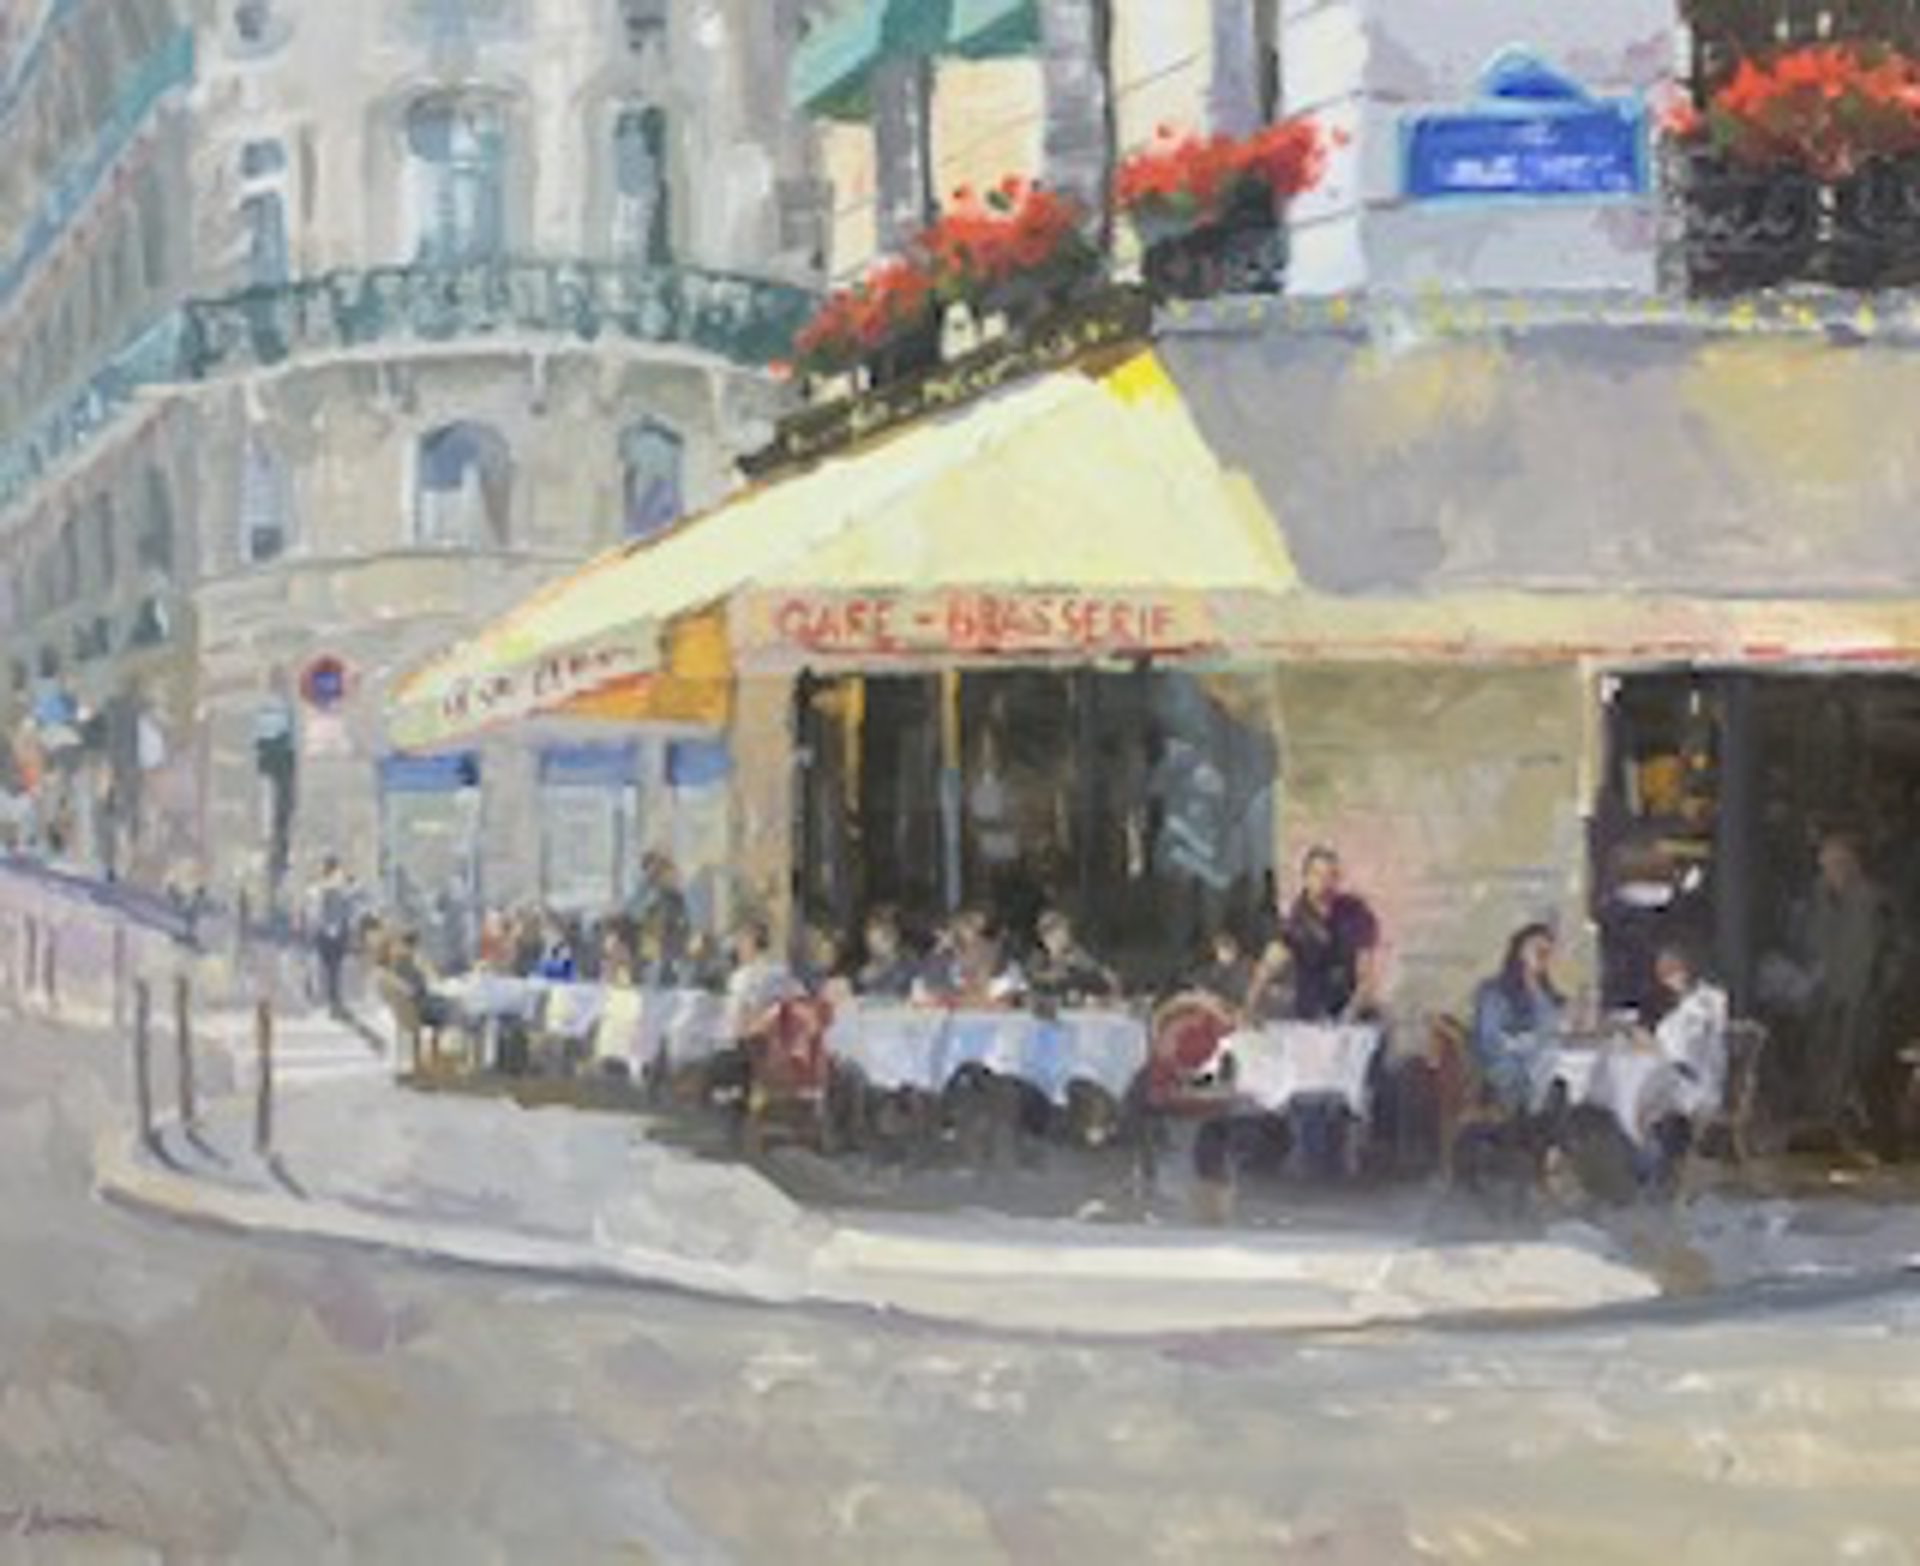 Cafe' Brasserie by Brent Jensen